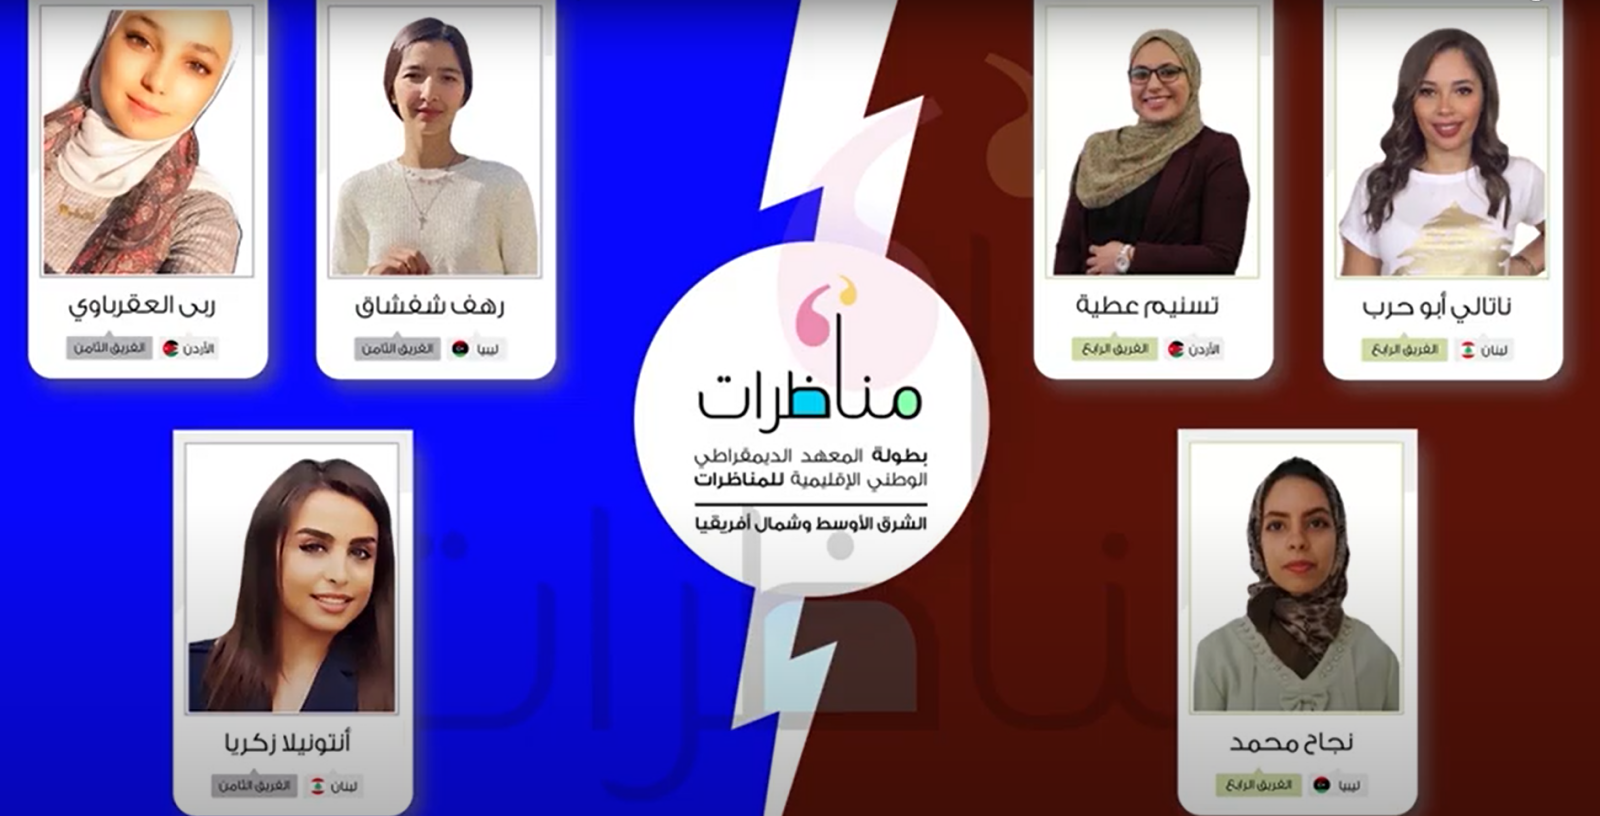 Youth from Jordan, Lebanon, and Libya Tackle Cross-Regional Issues in Virtual Debates